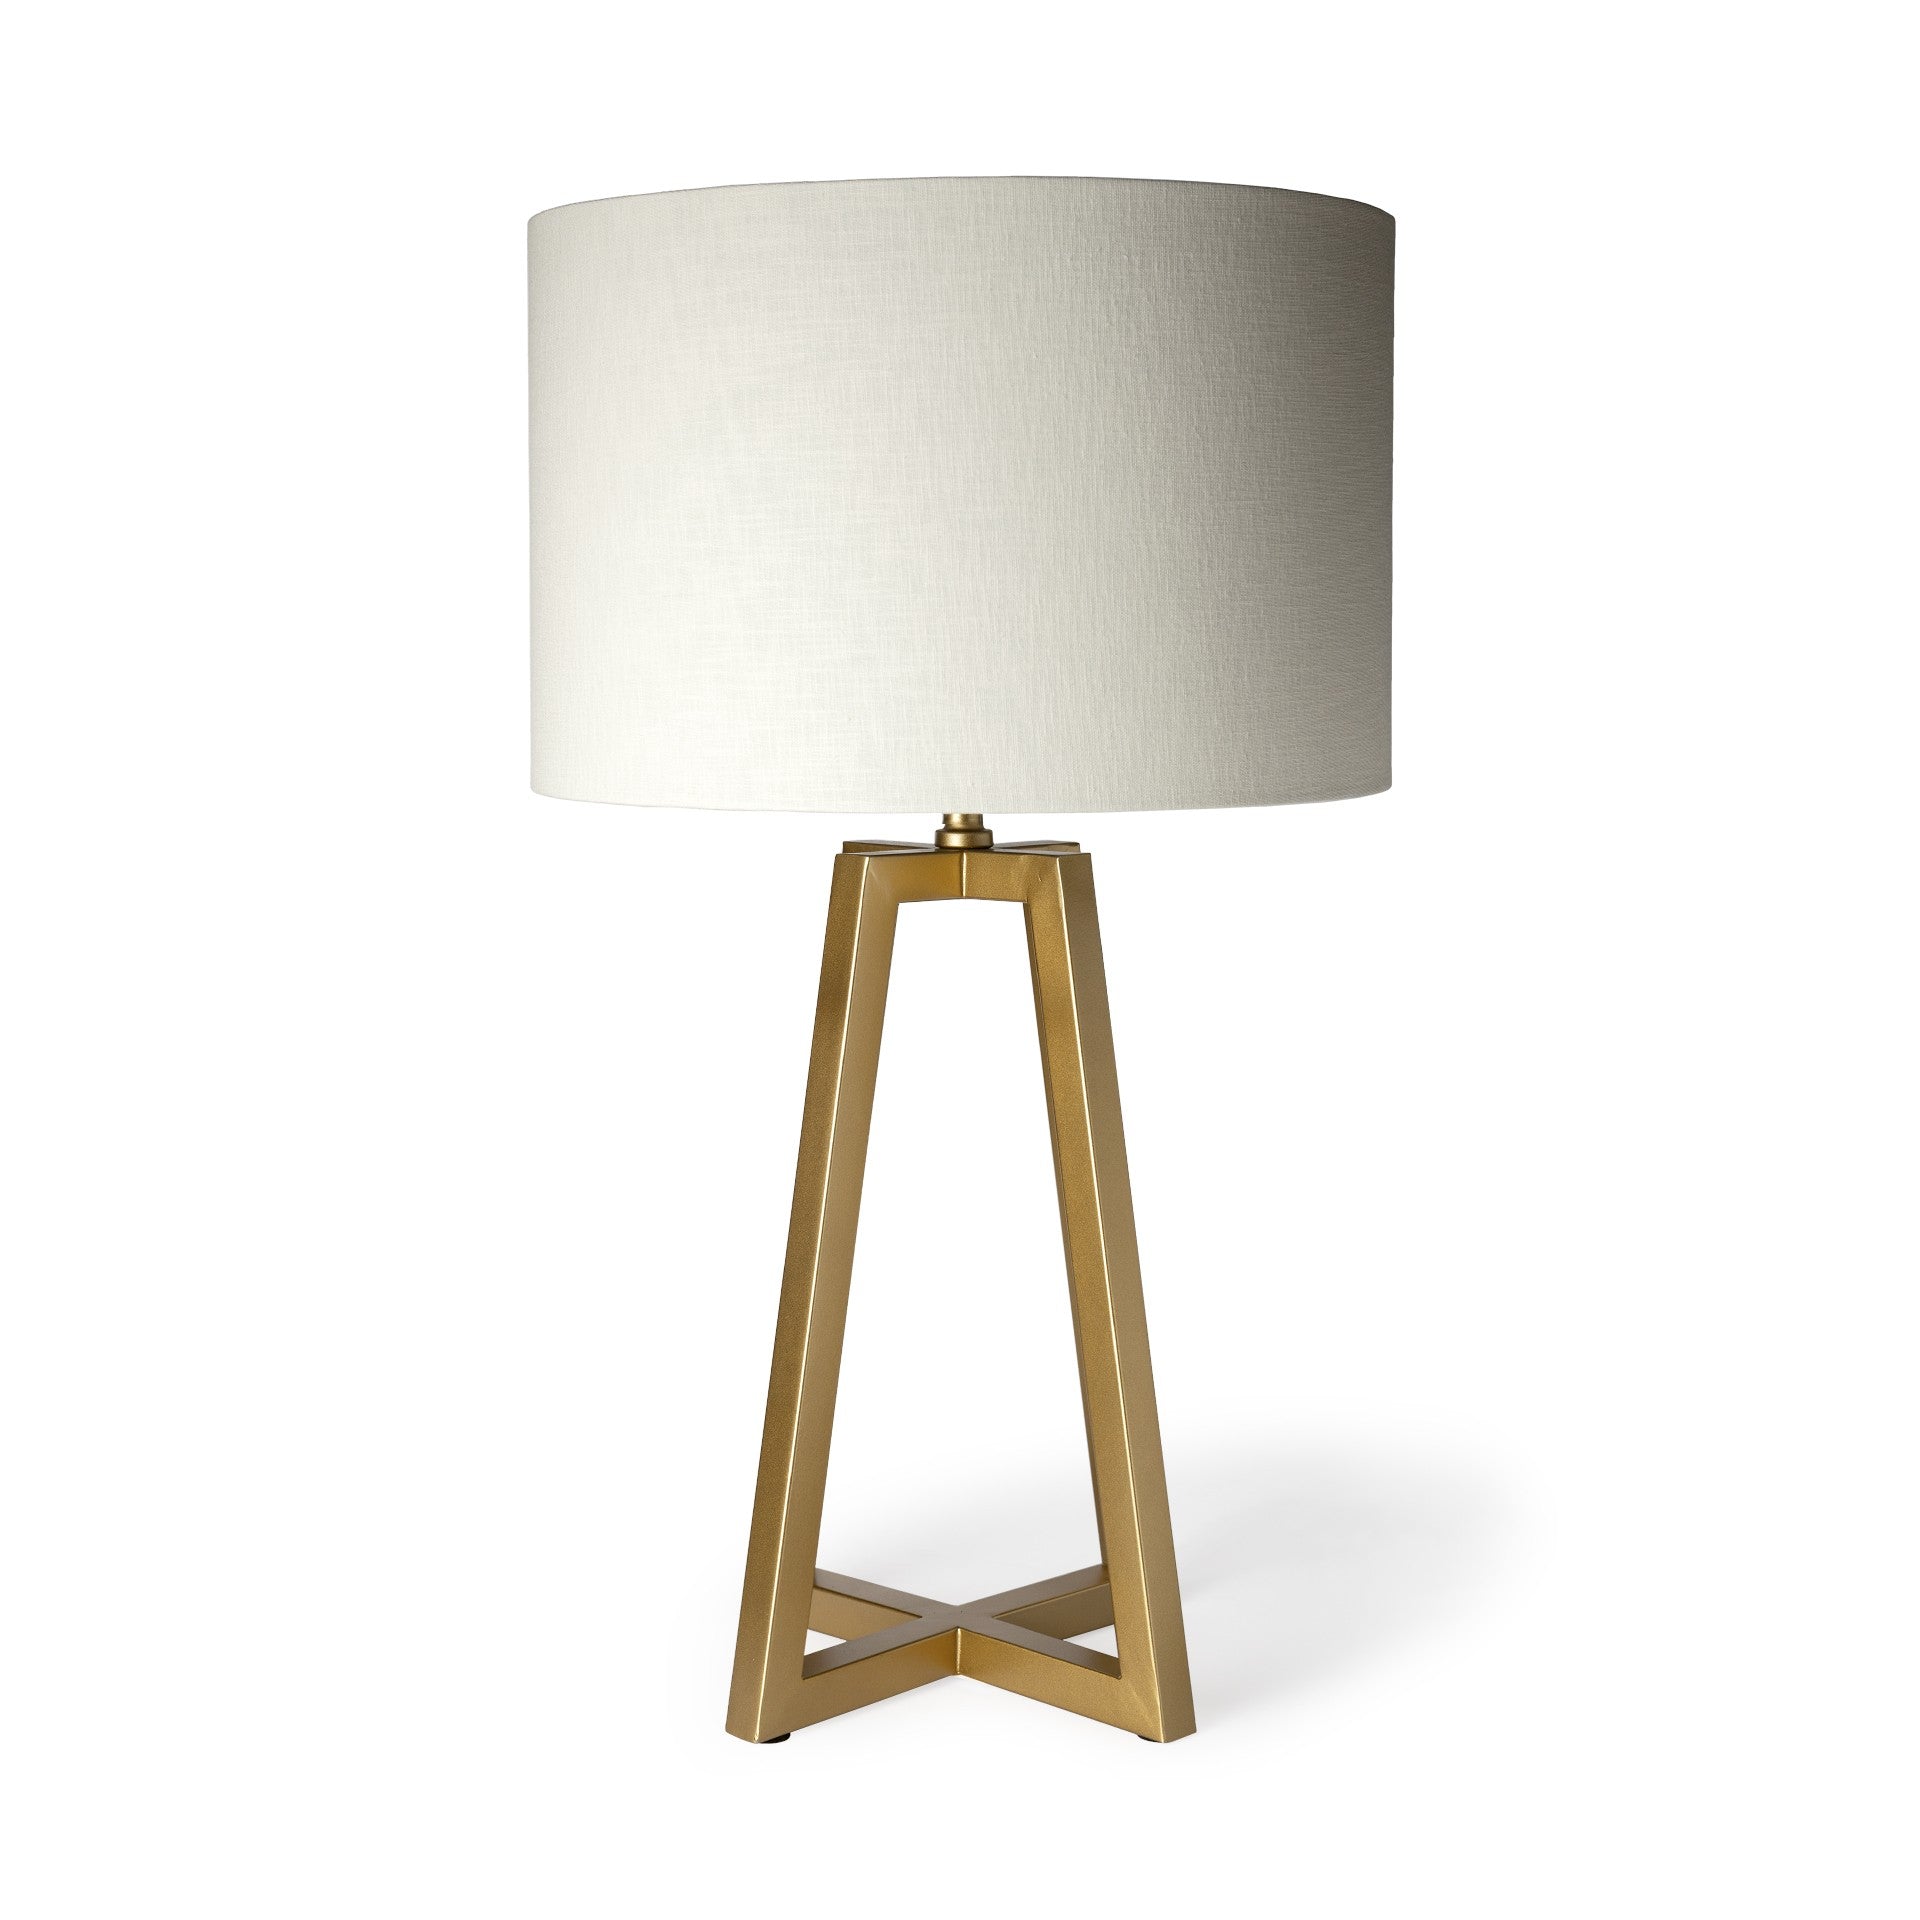 Metallic Gold Tone Geometric Table Lamp - Team Spirit Store USA 